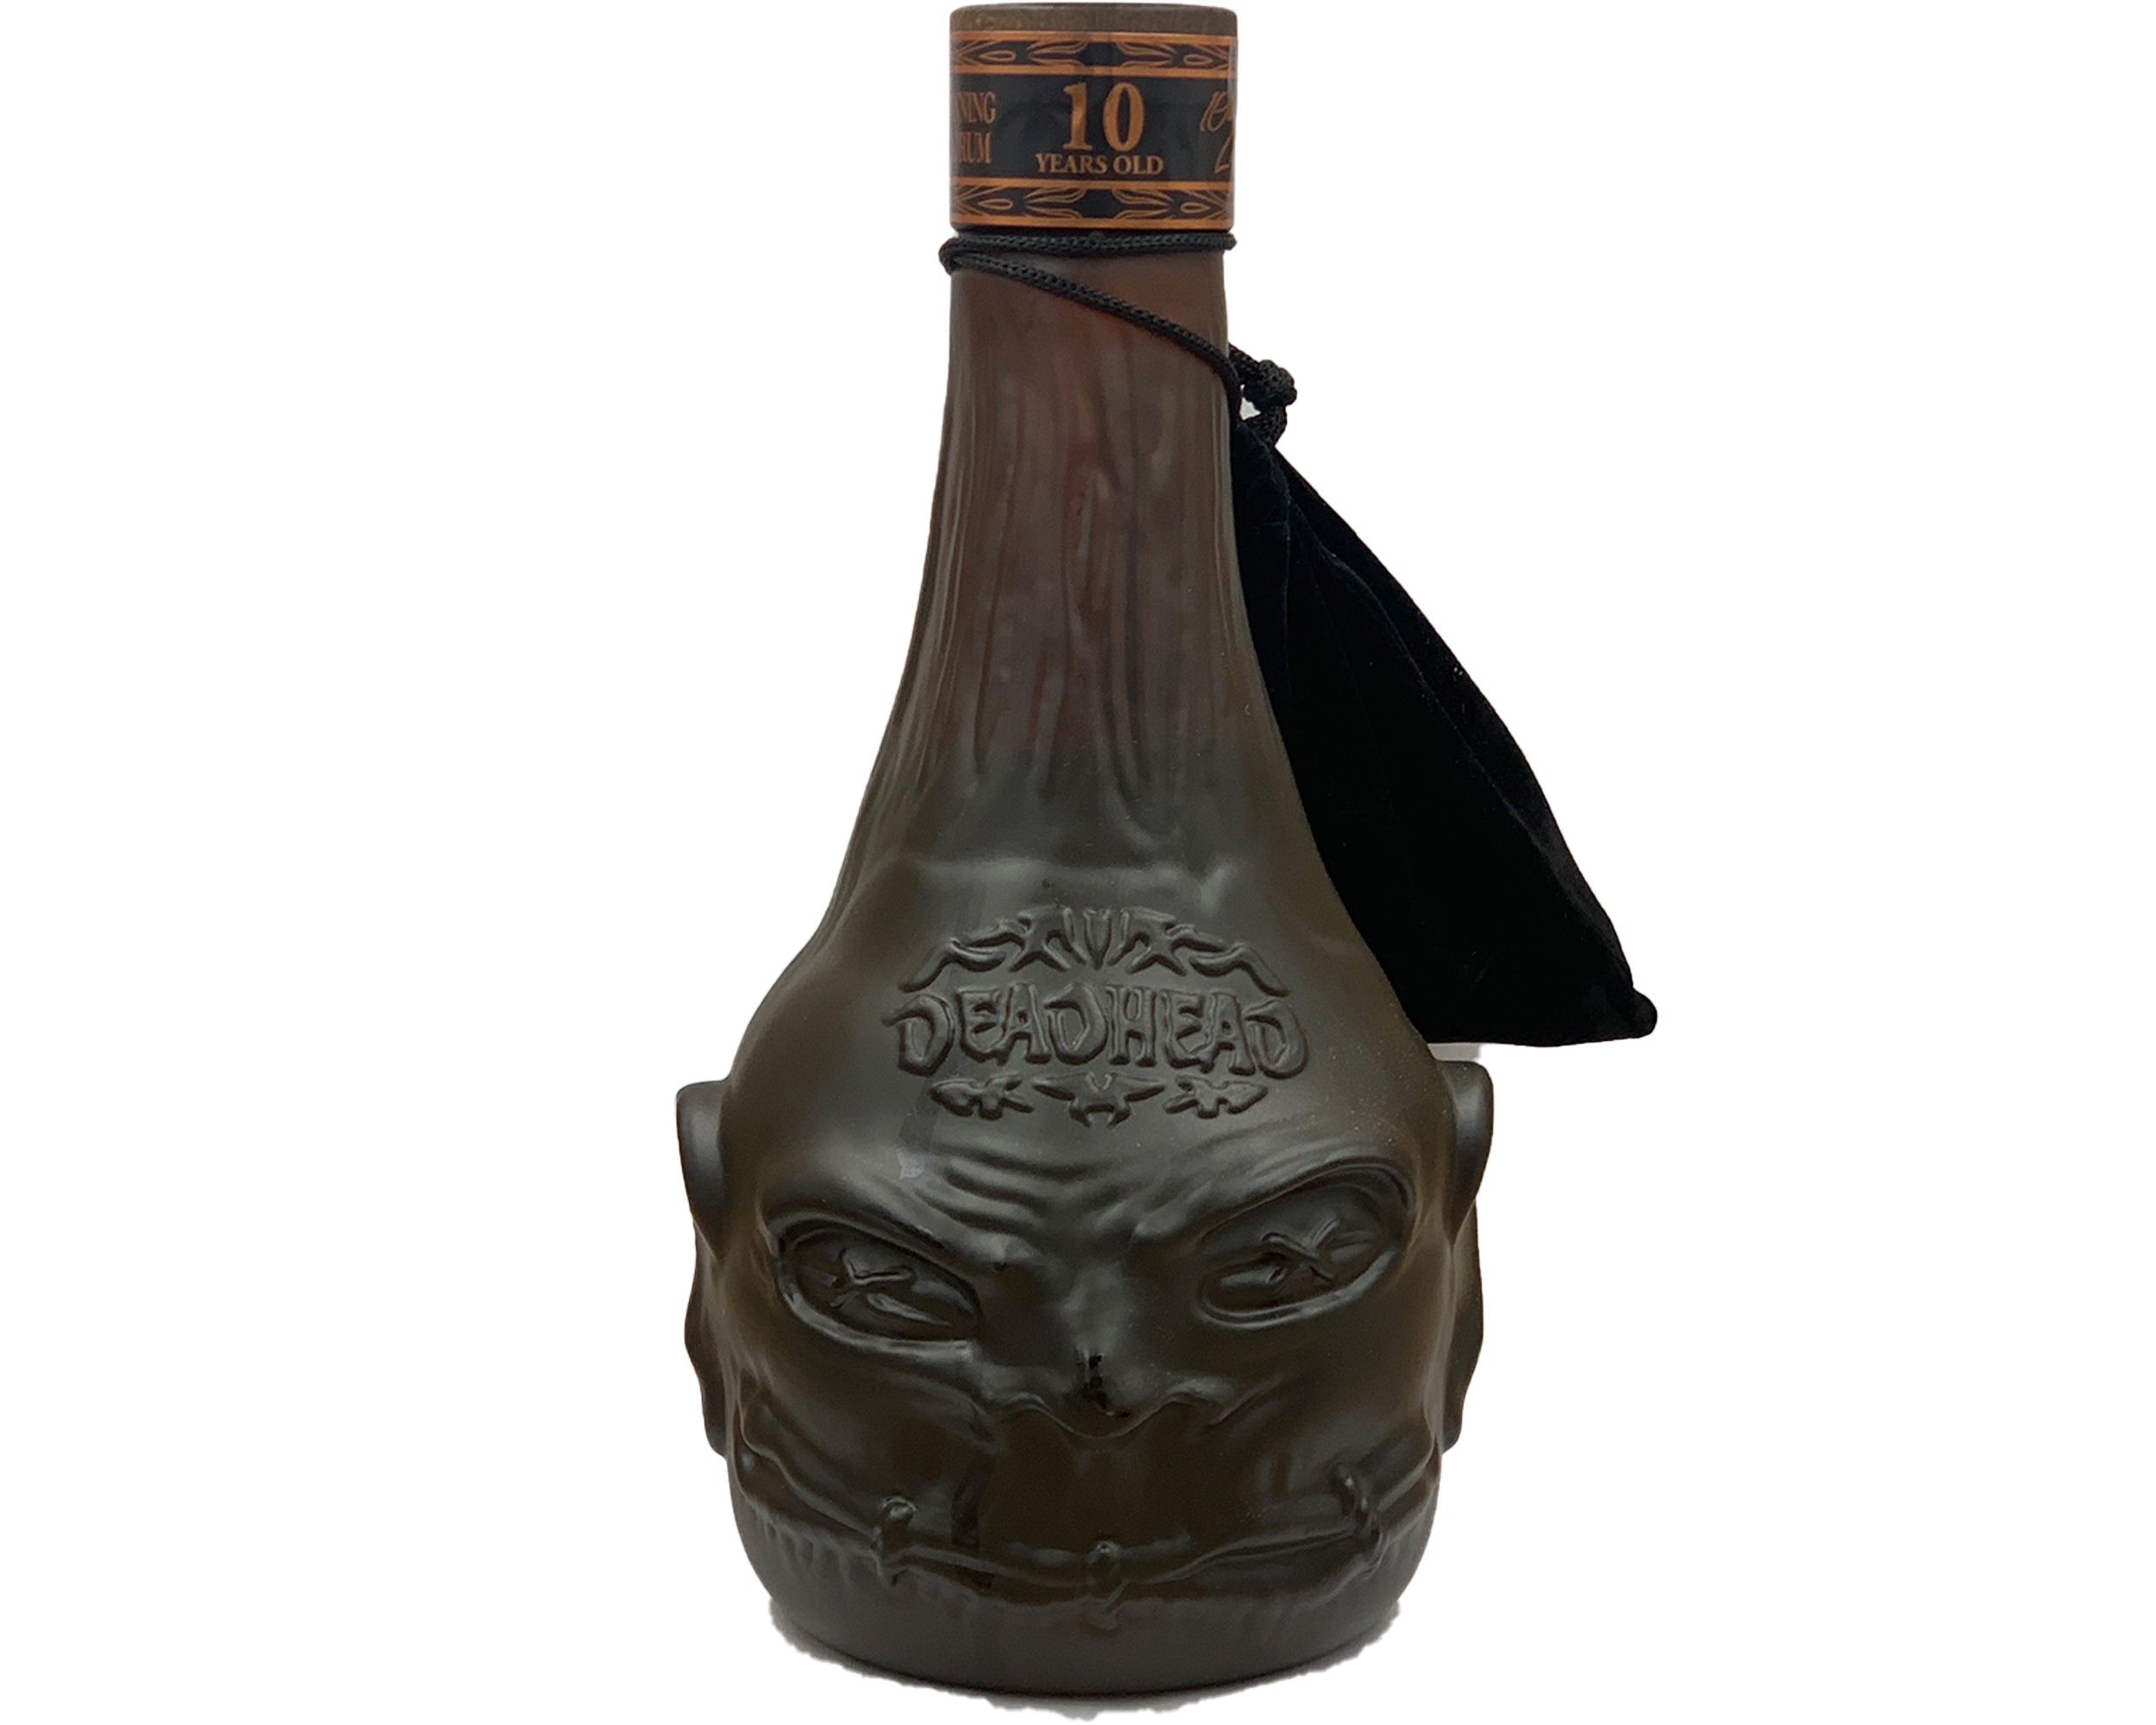 Deadhead 10th Anniversary Limited Edition 10yr Rum